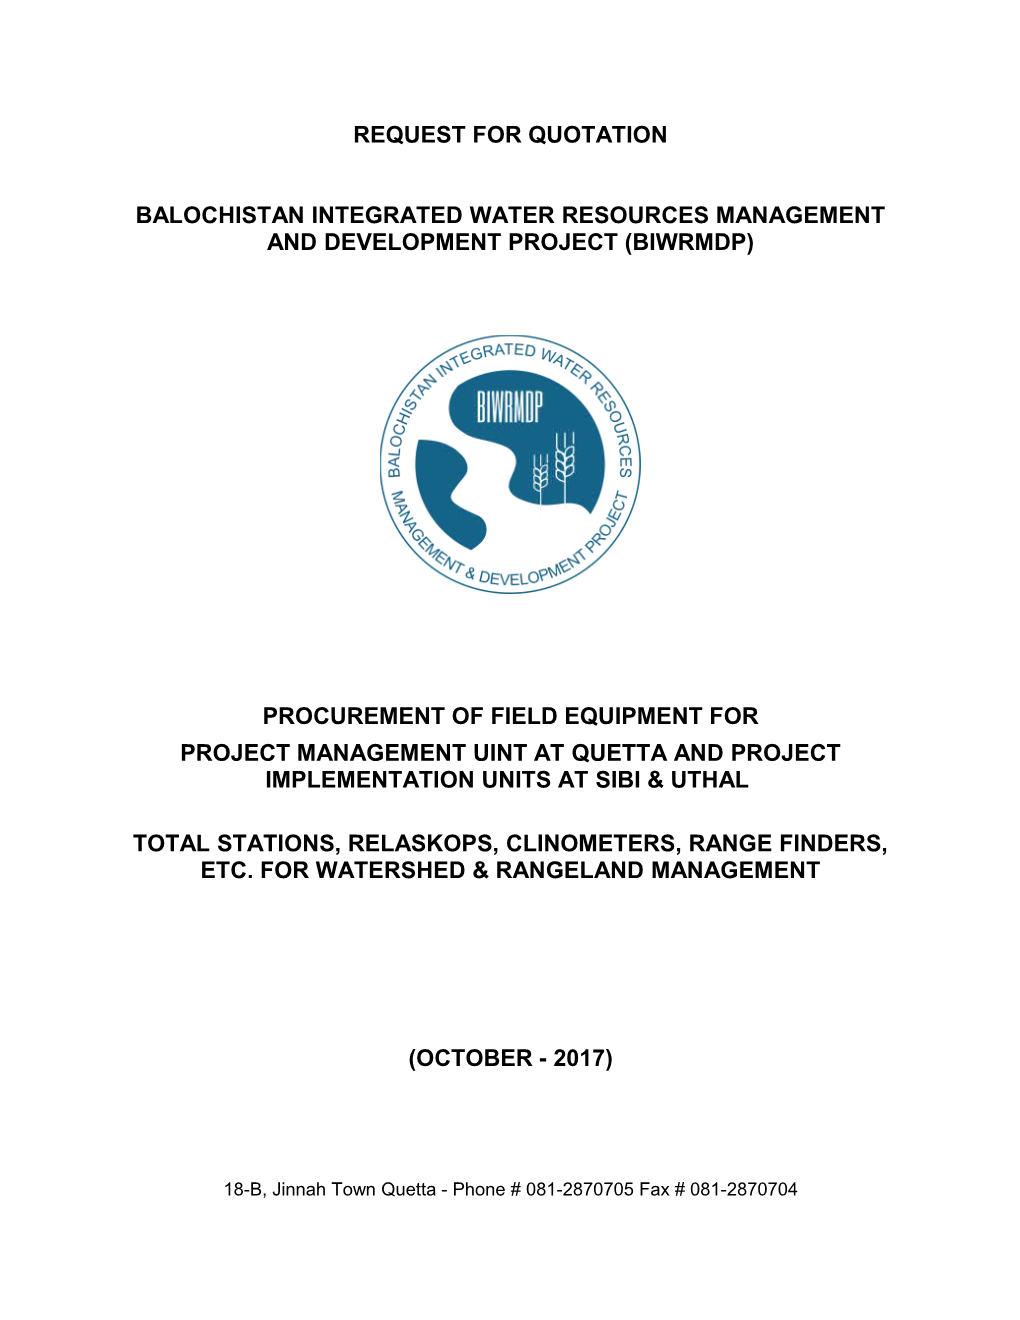 Balochistan Integrated Water Resources Management and Development Project (Biwrmdp)